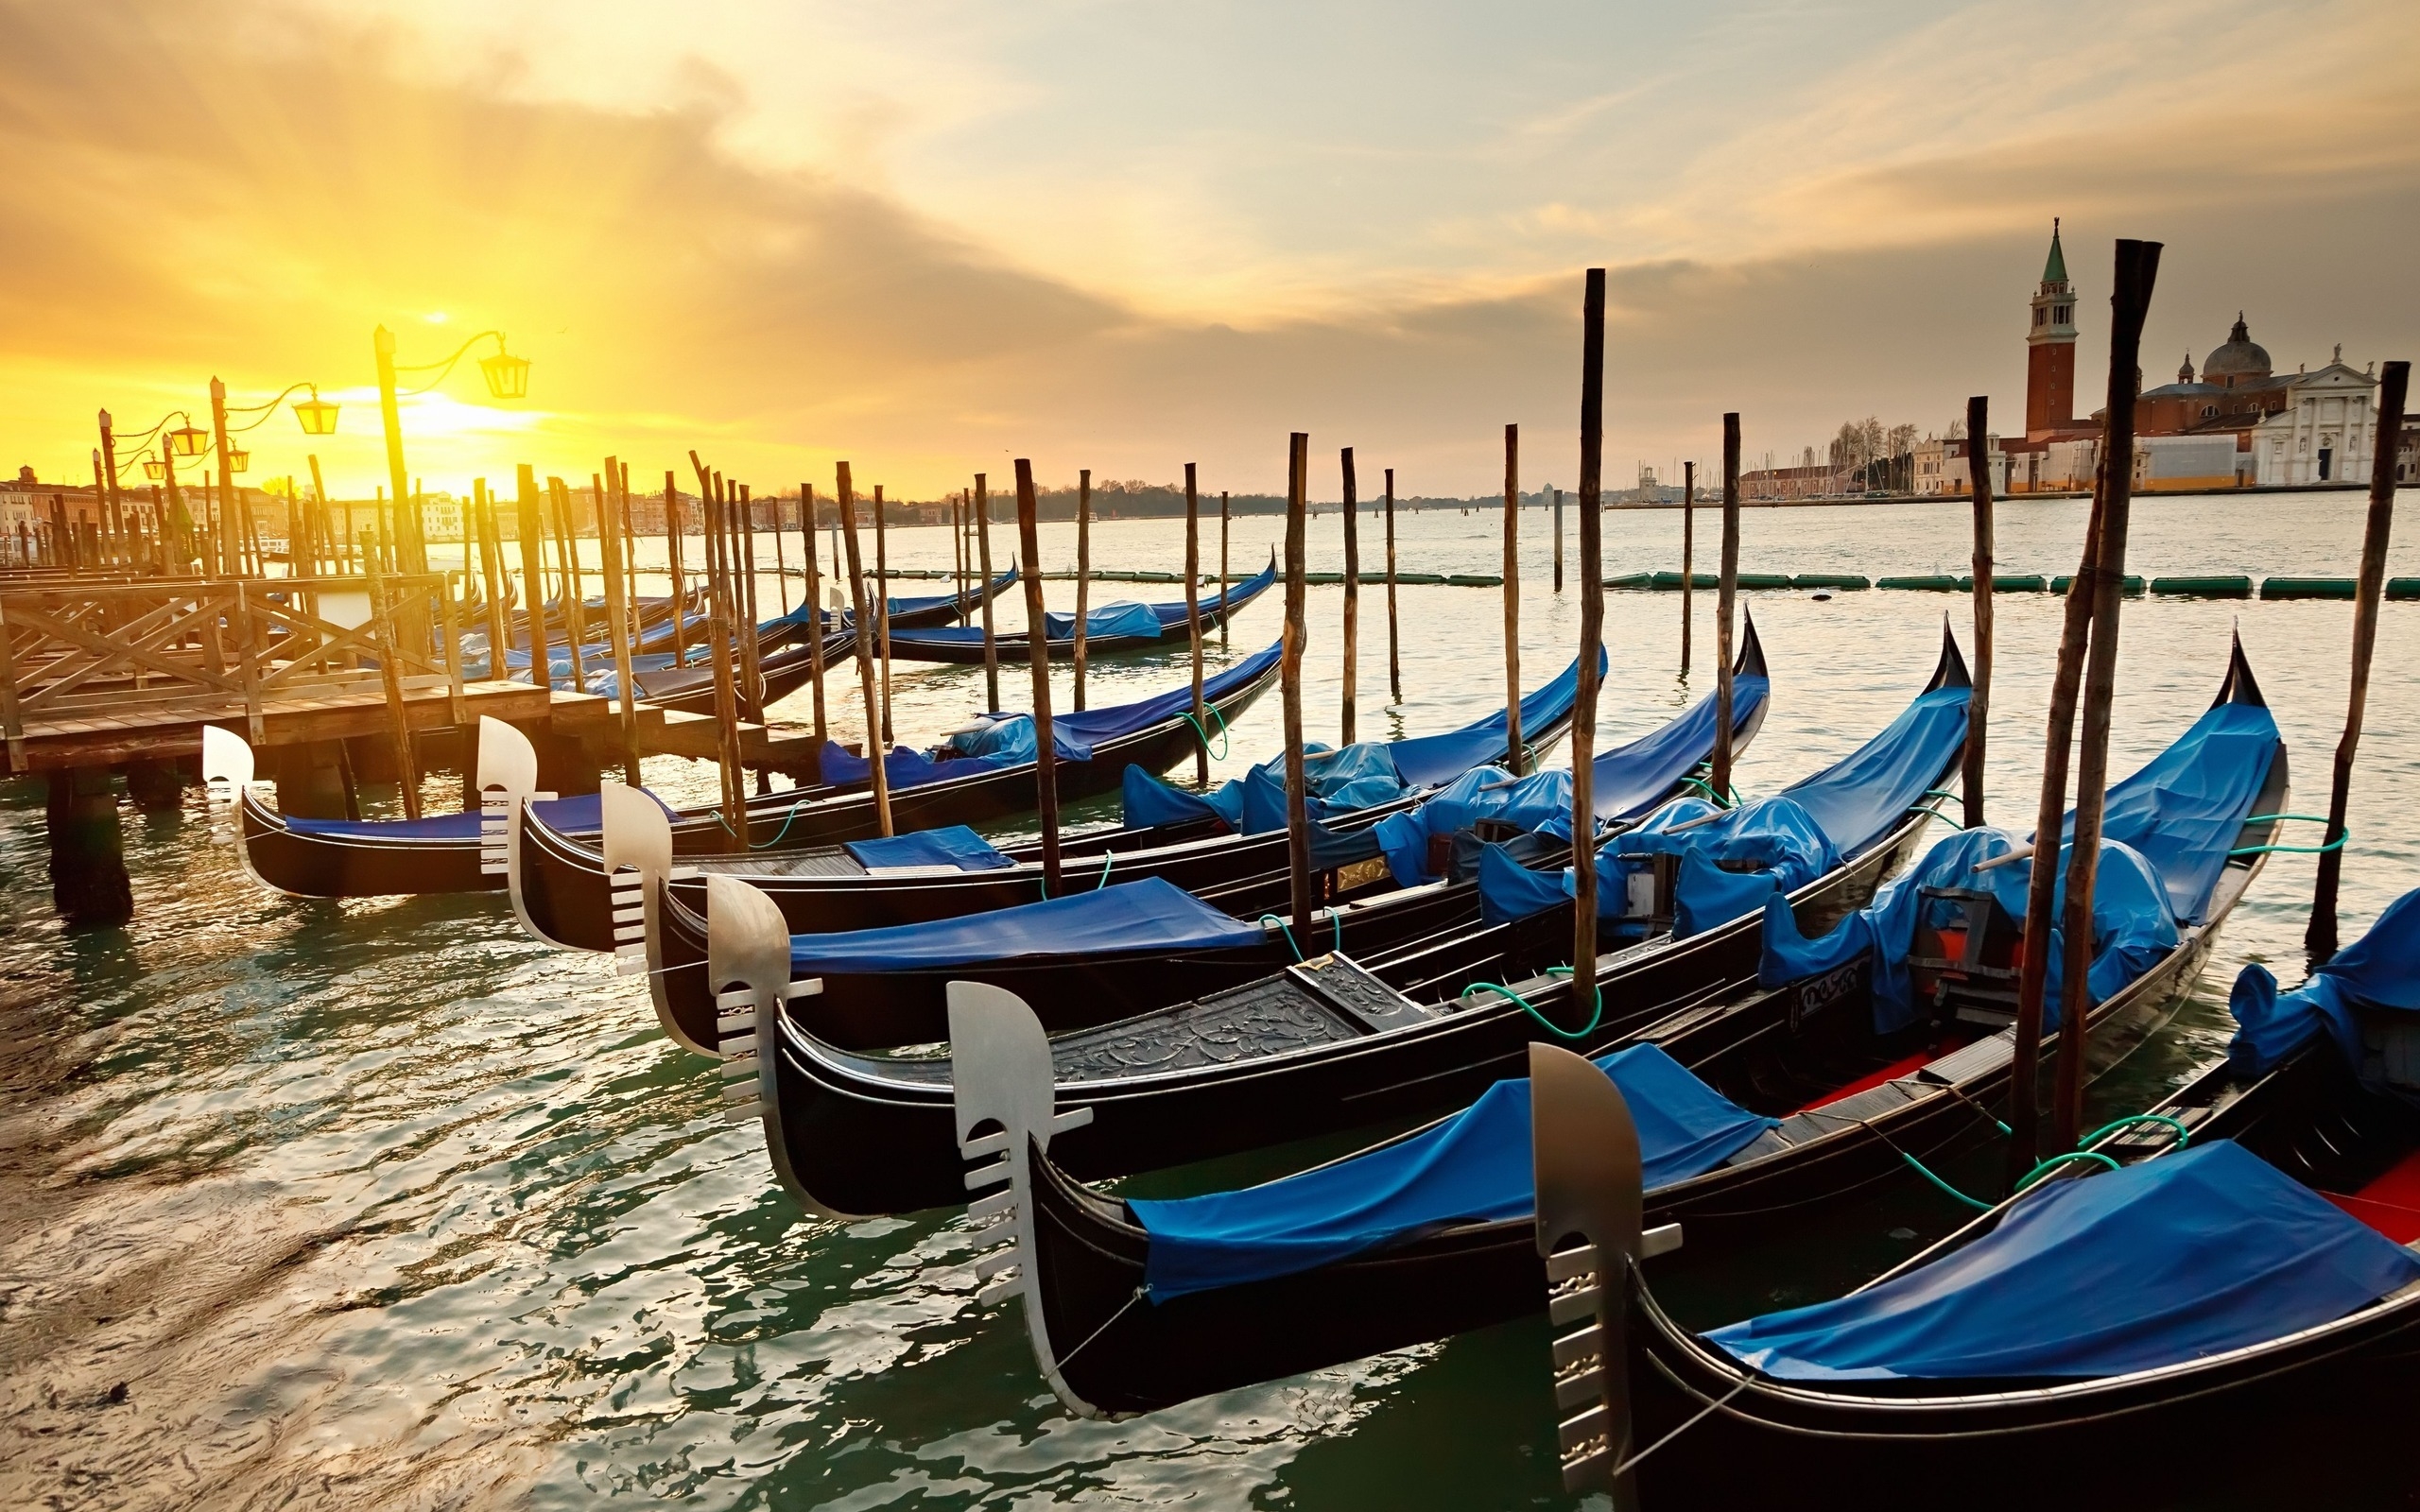 Venice Sunrise for 2560 x 1600 widescreen resolution